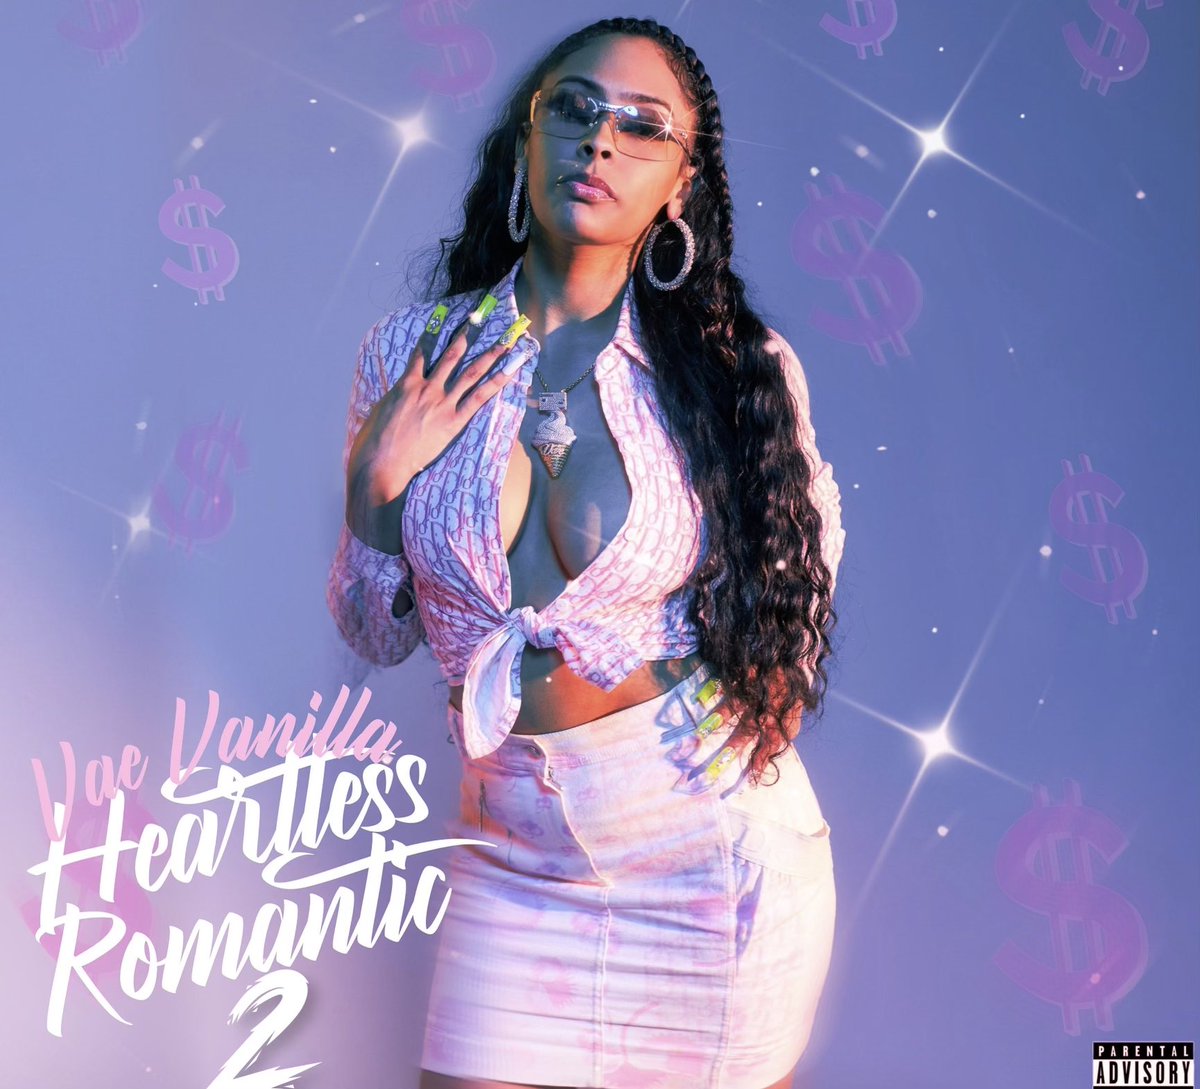 Vae Vanilla Releases New EP 'Heartless Romantic 2'